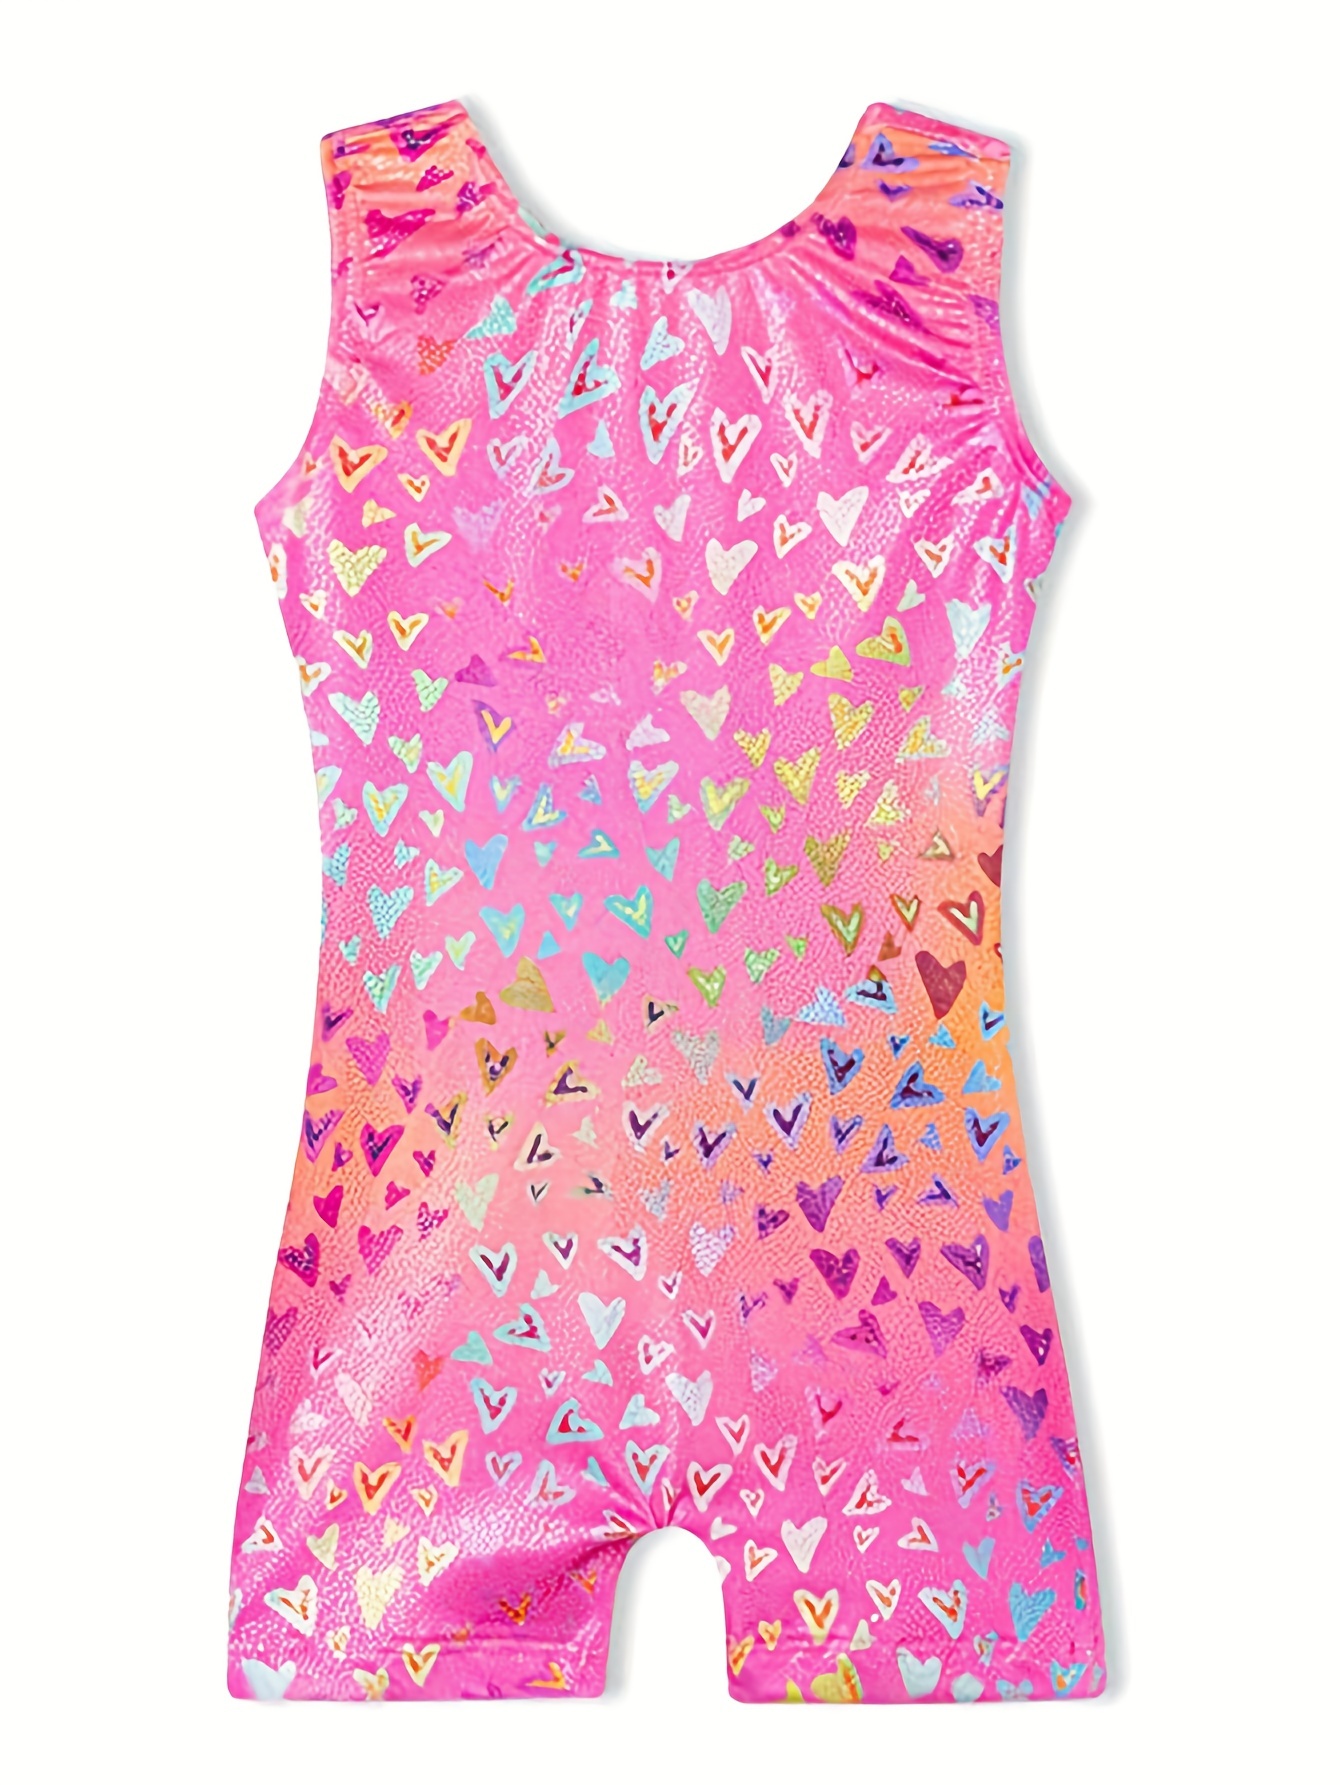 Gradient Heart Graphic Ballet Leotard Girls Comfy Sweet Gymnastics Suit